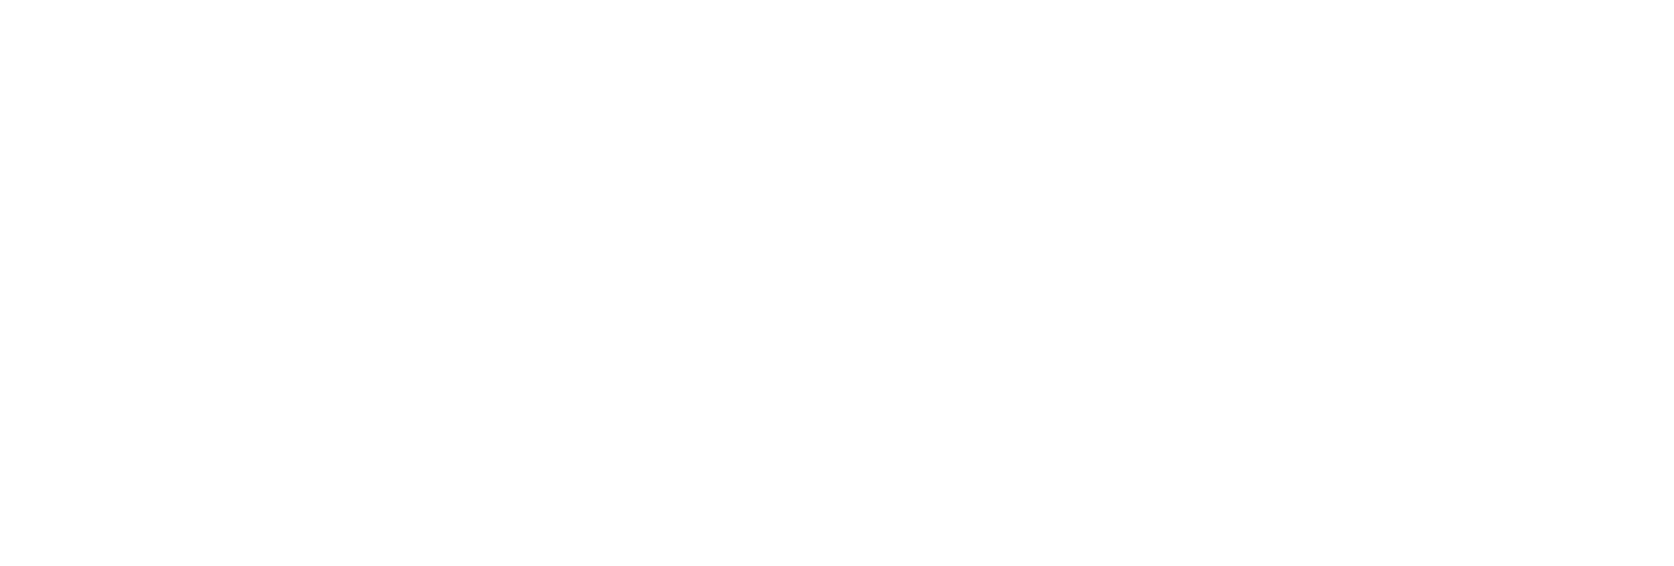 fuboTV Logo groß für dunkle Hintergründe (transparentes PNG)